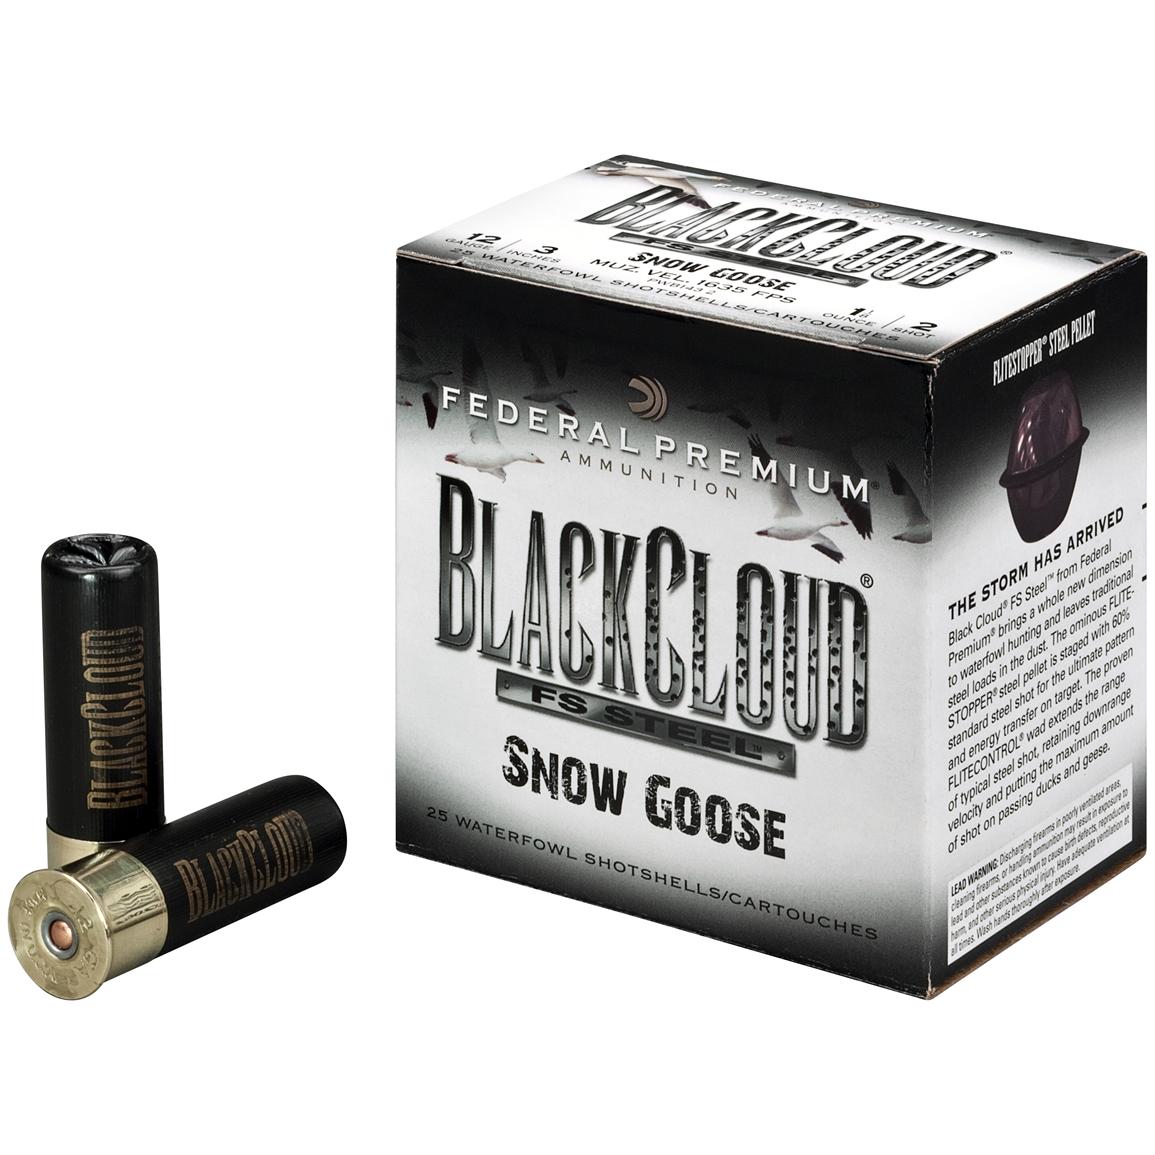 25 Rounds Federal Premium Black Cloud Snow Goose Shot Shells 228720 